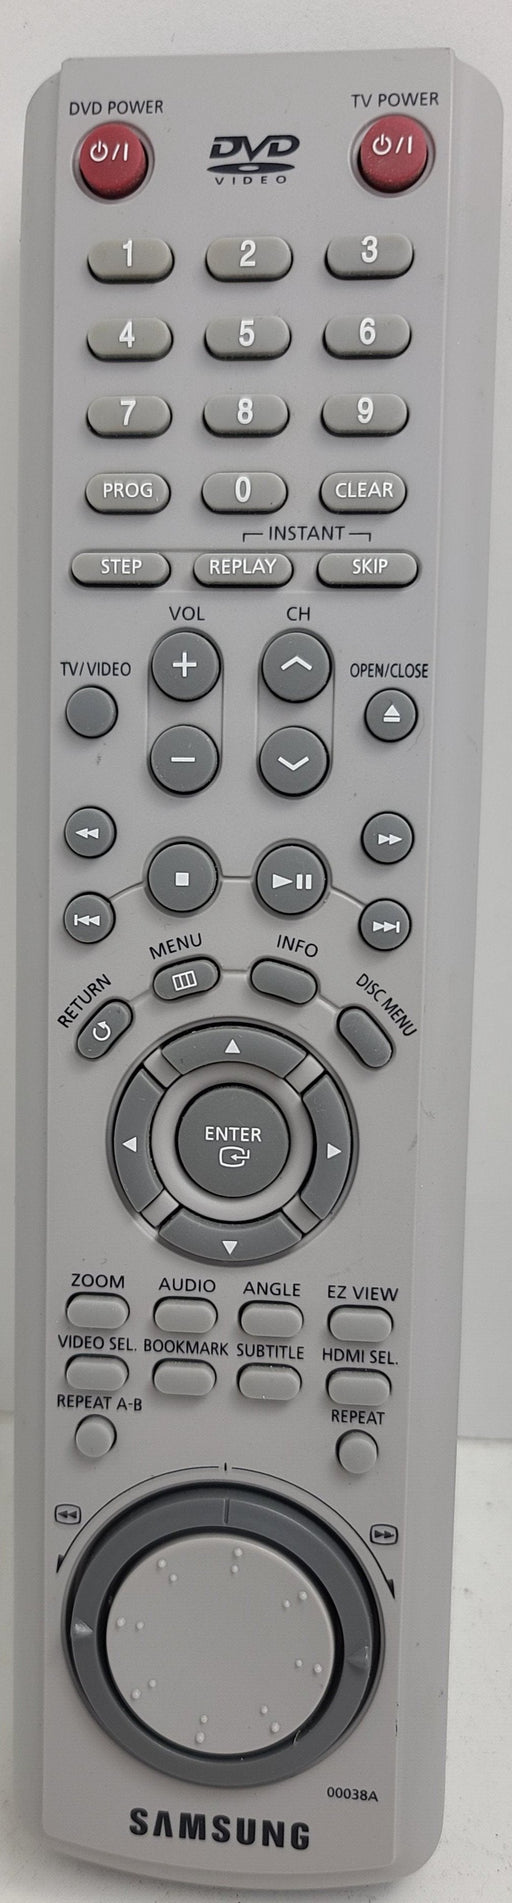 Samsung 00038A DVD Player Remote Control for Model DVD-HD850-Remote-SpenCertified-refurbished-vintage-electonics